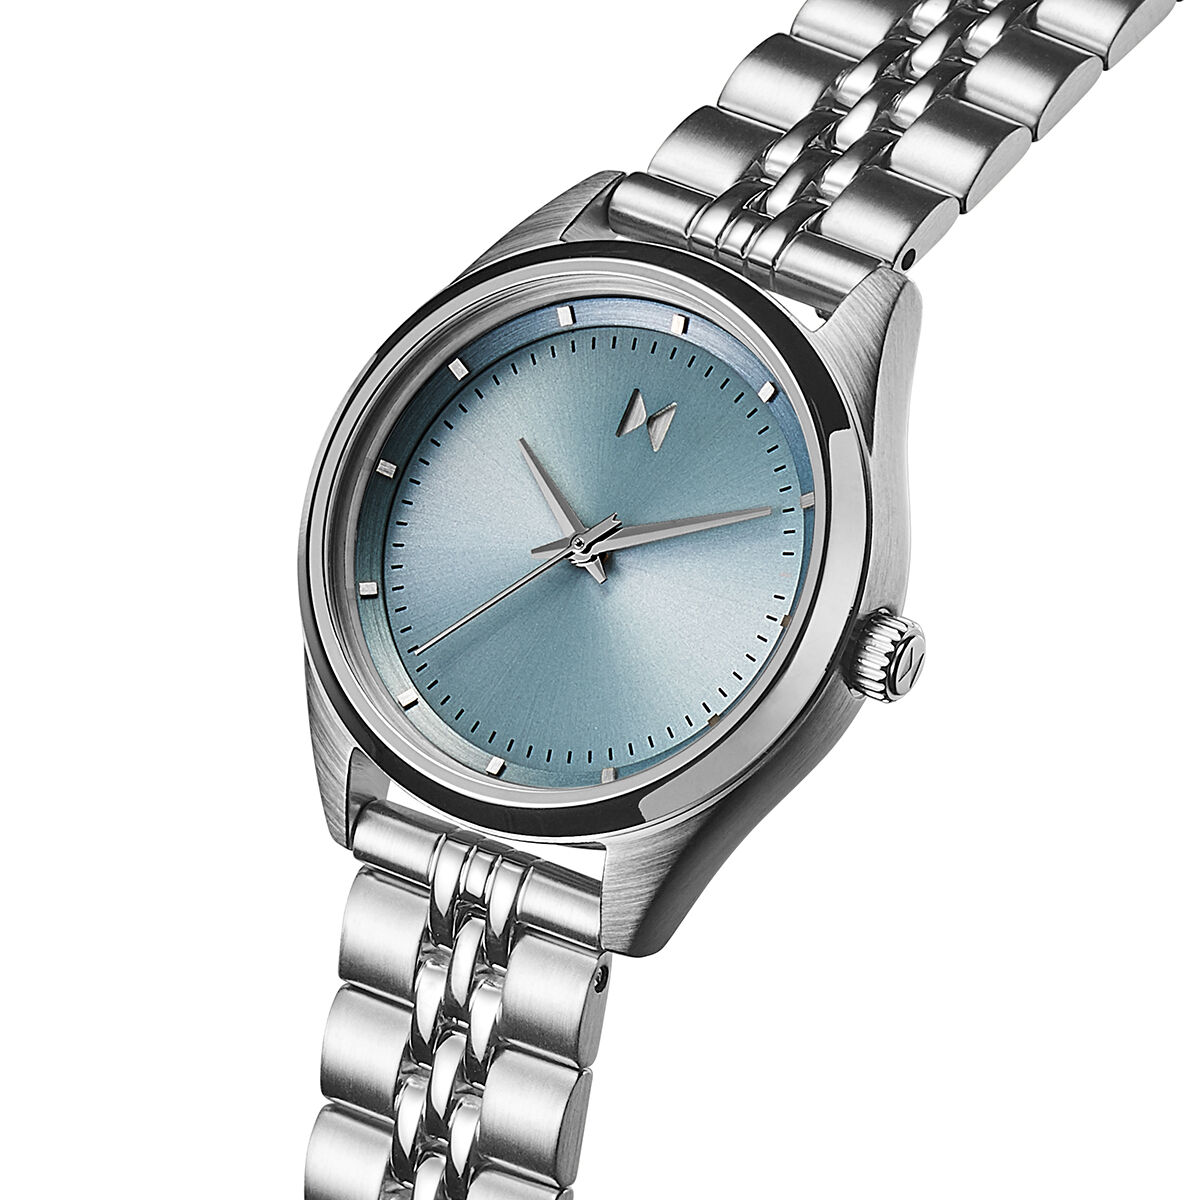 Aquatic Watch, Inc.